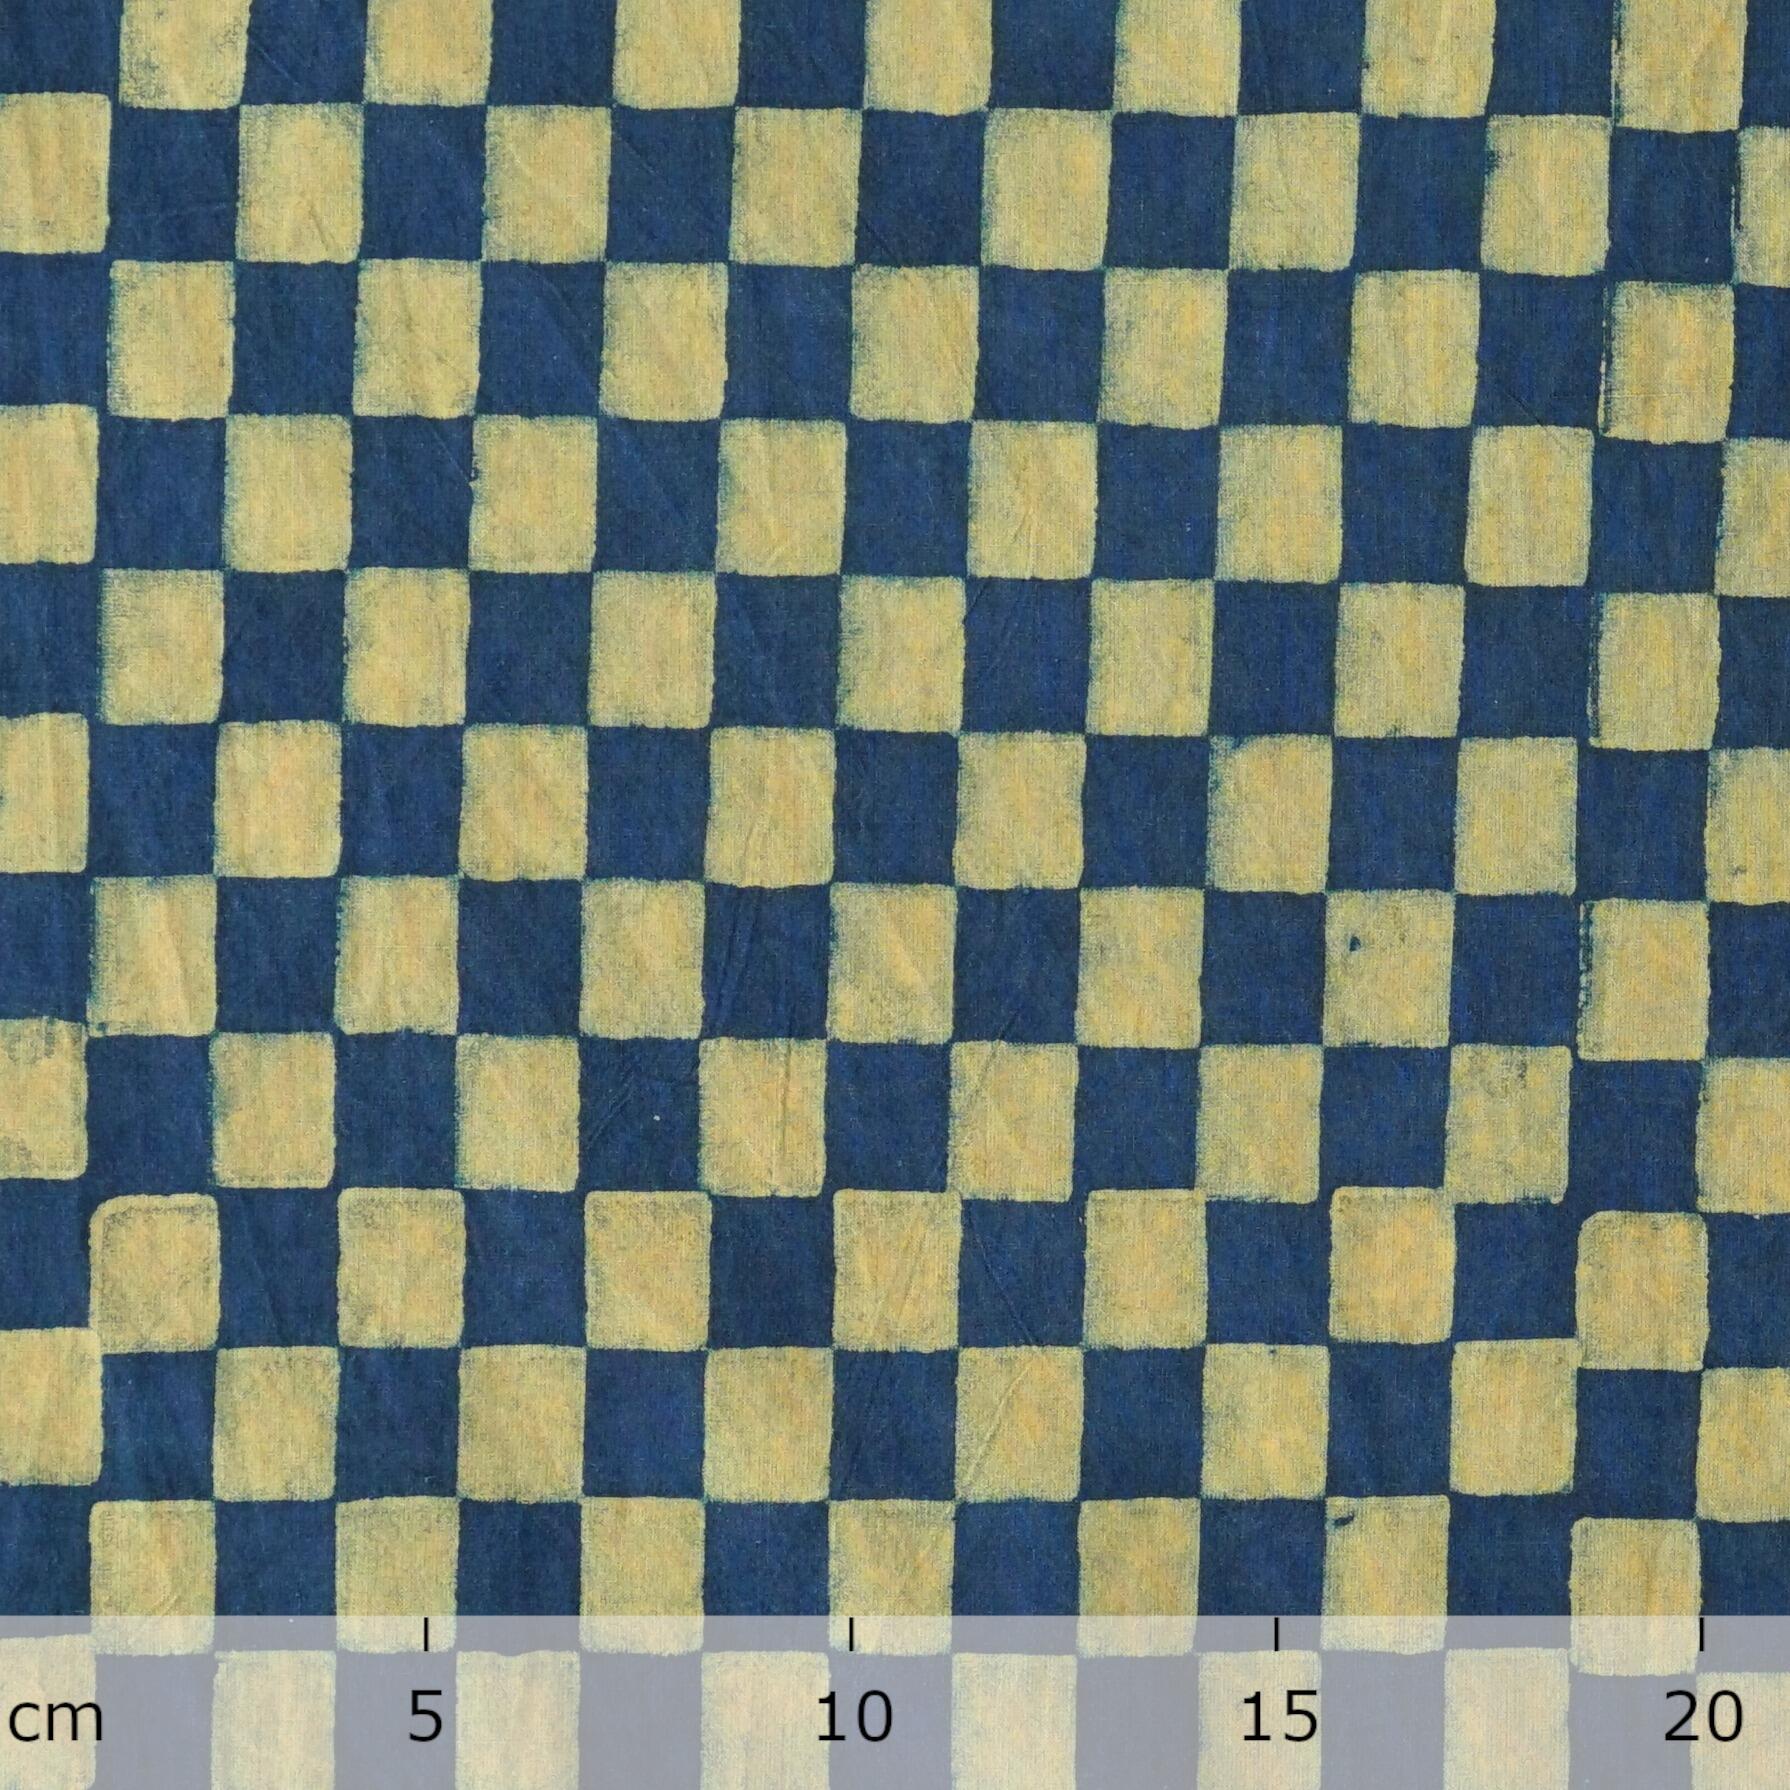 4 - AHM56 - Block-Printed Fabric - Checkerboard - Indigo & Tamarisk Yellow Dyes - Ruler